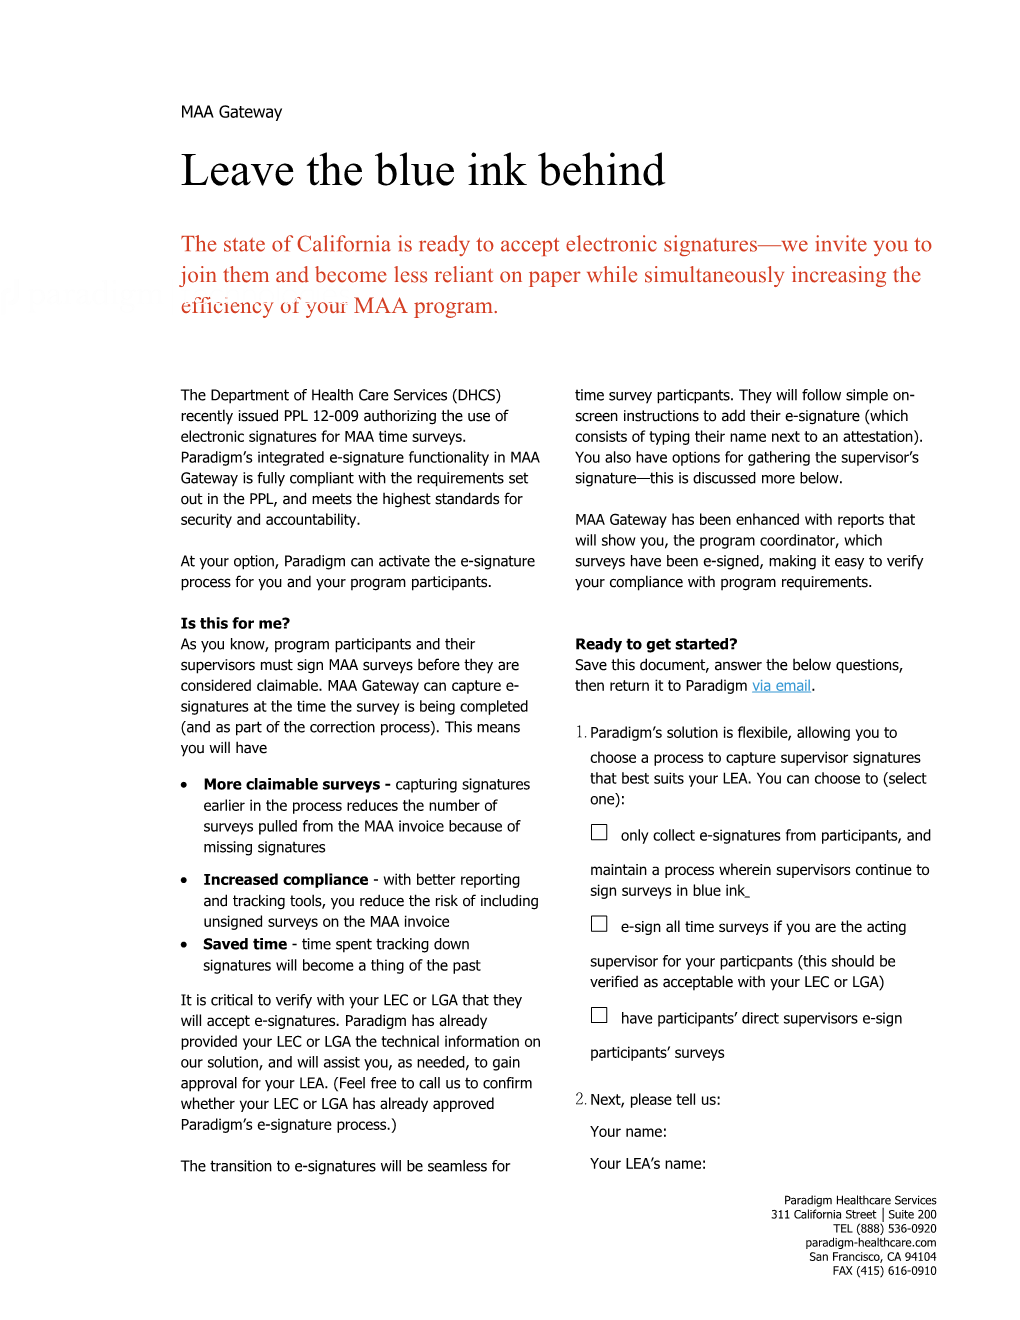 Leave the Blue Ink Behind